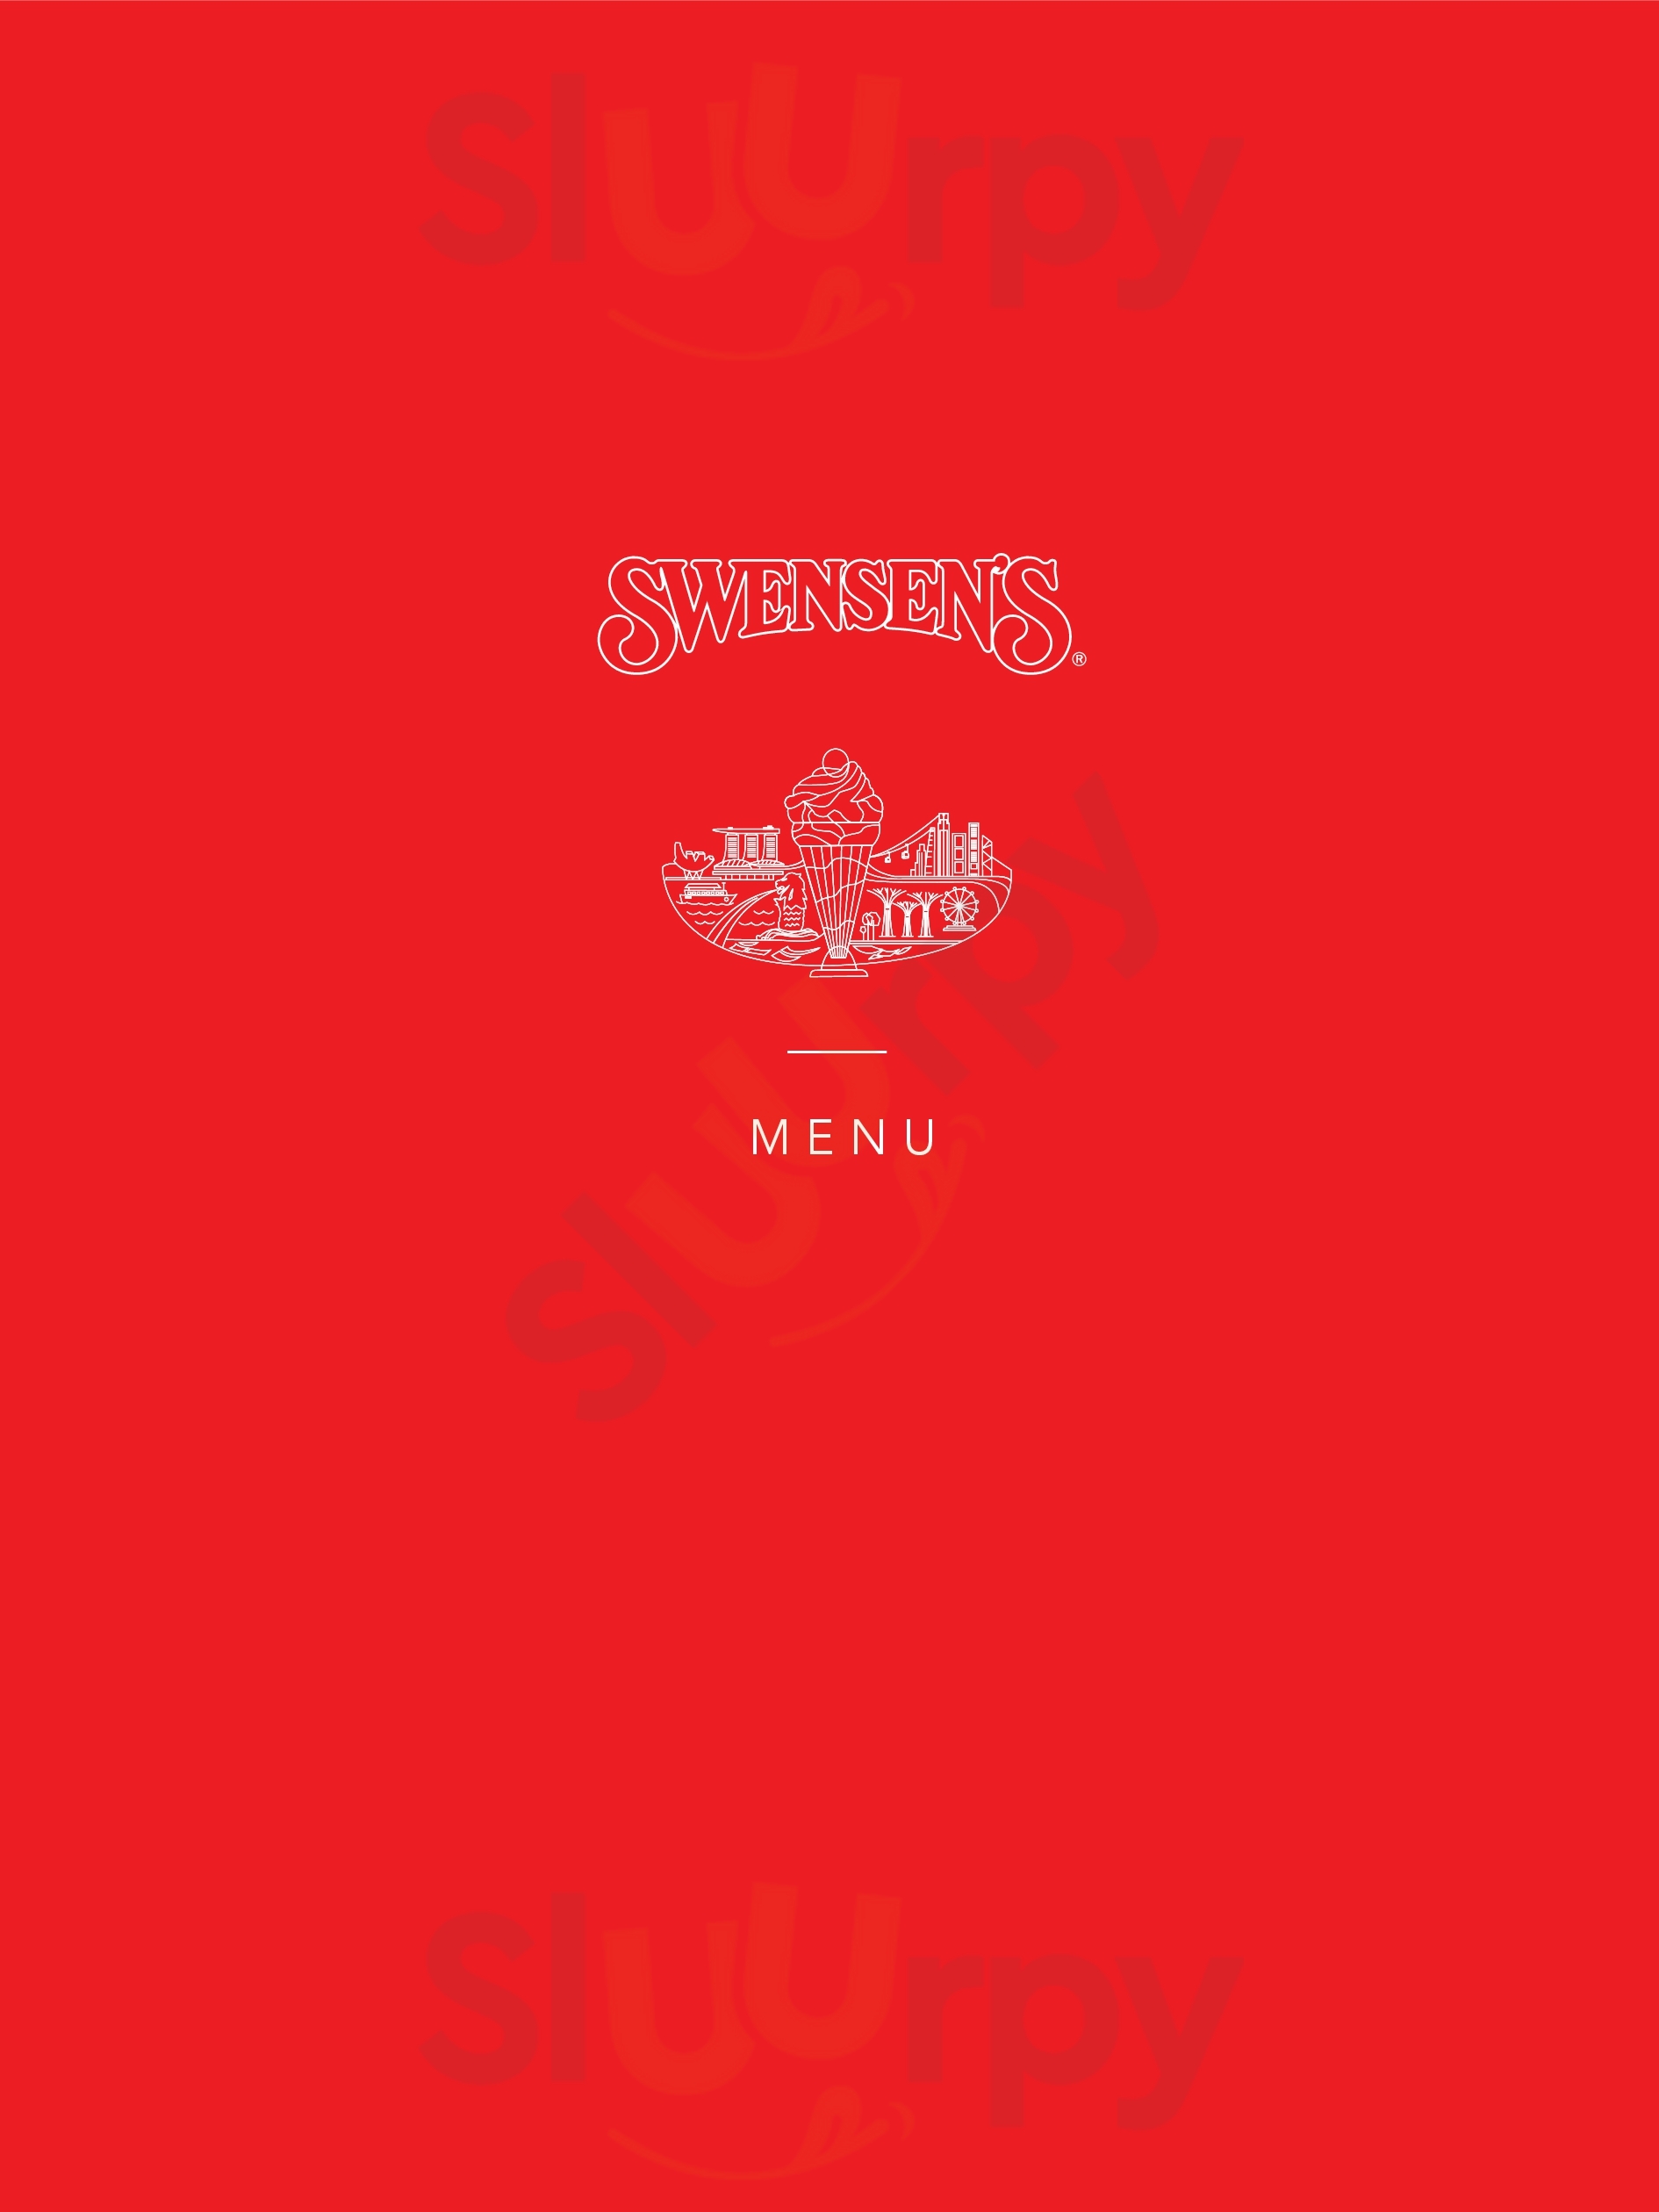 Sweetness' Restaurant, Nex Mall Singapore Menu - 1